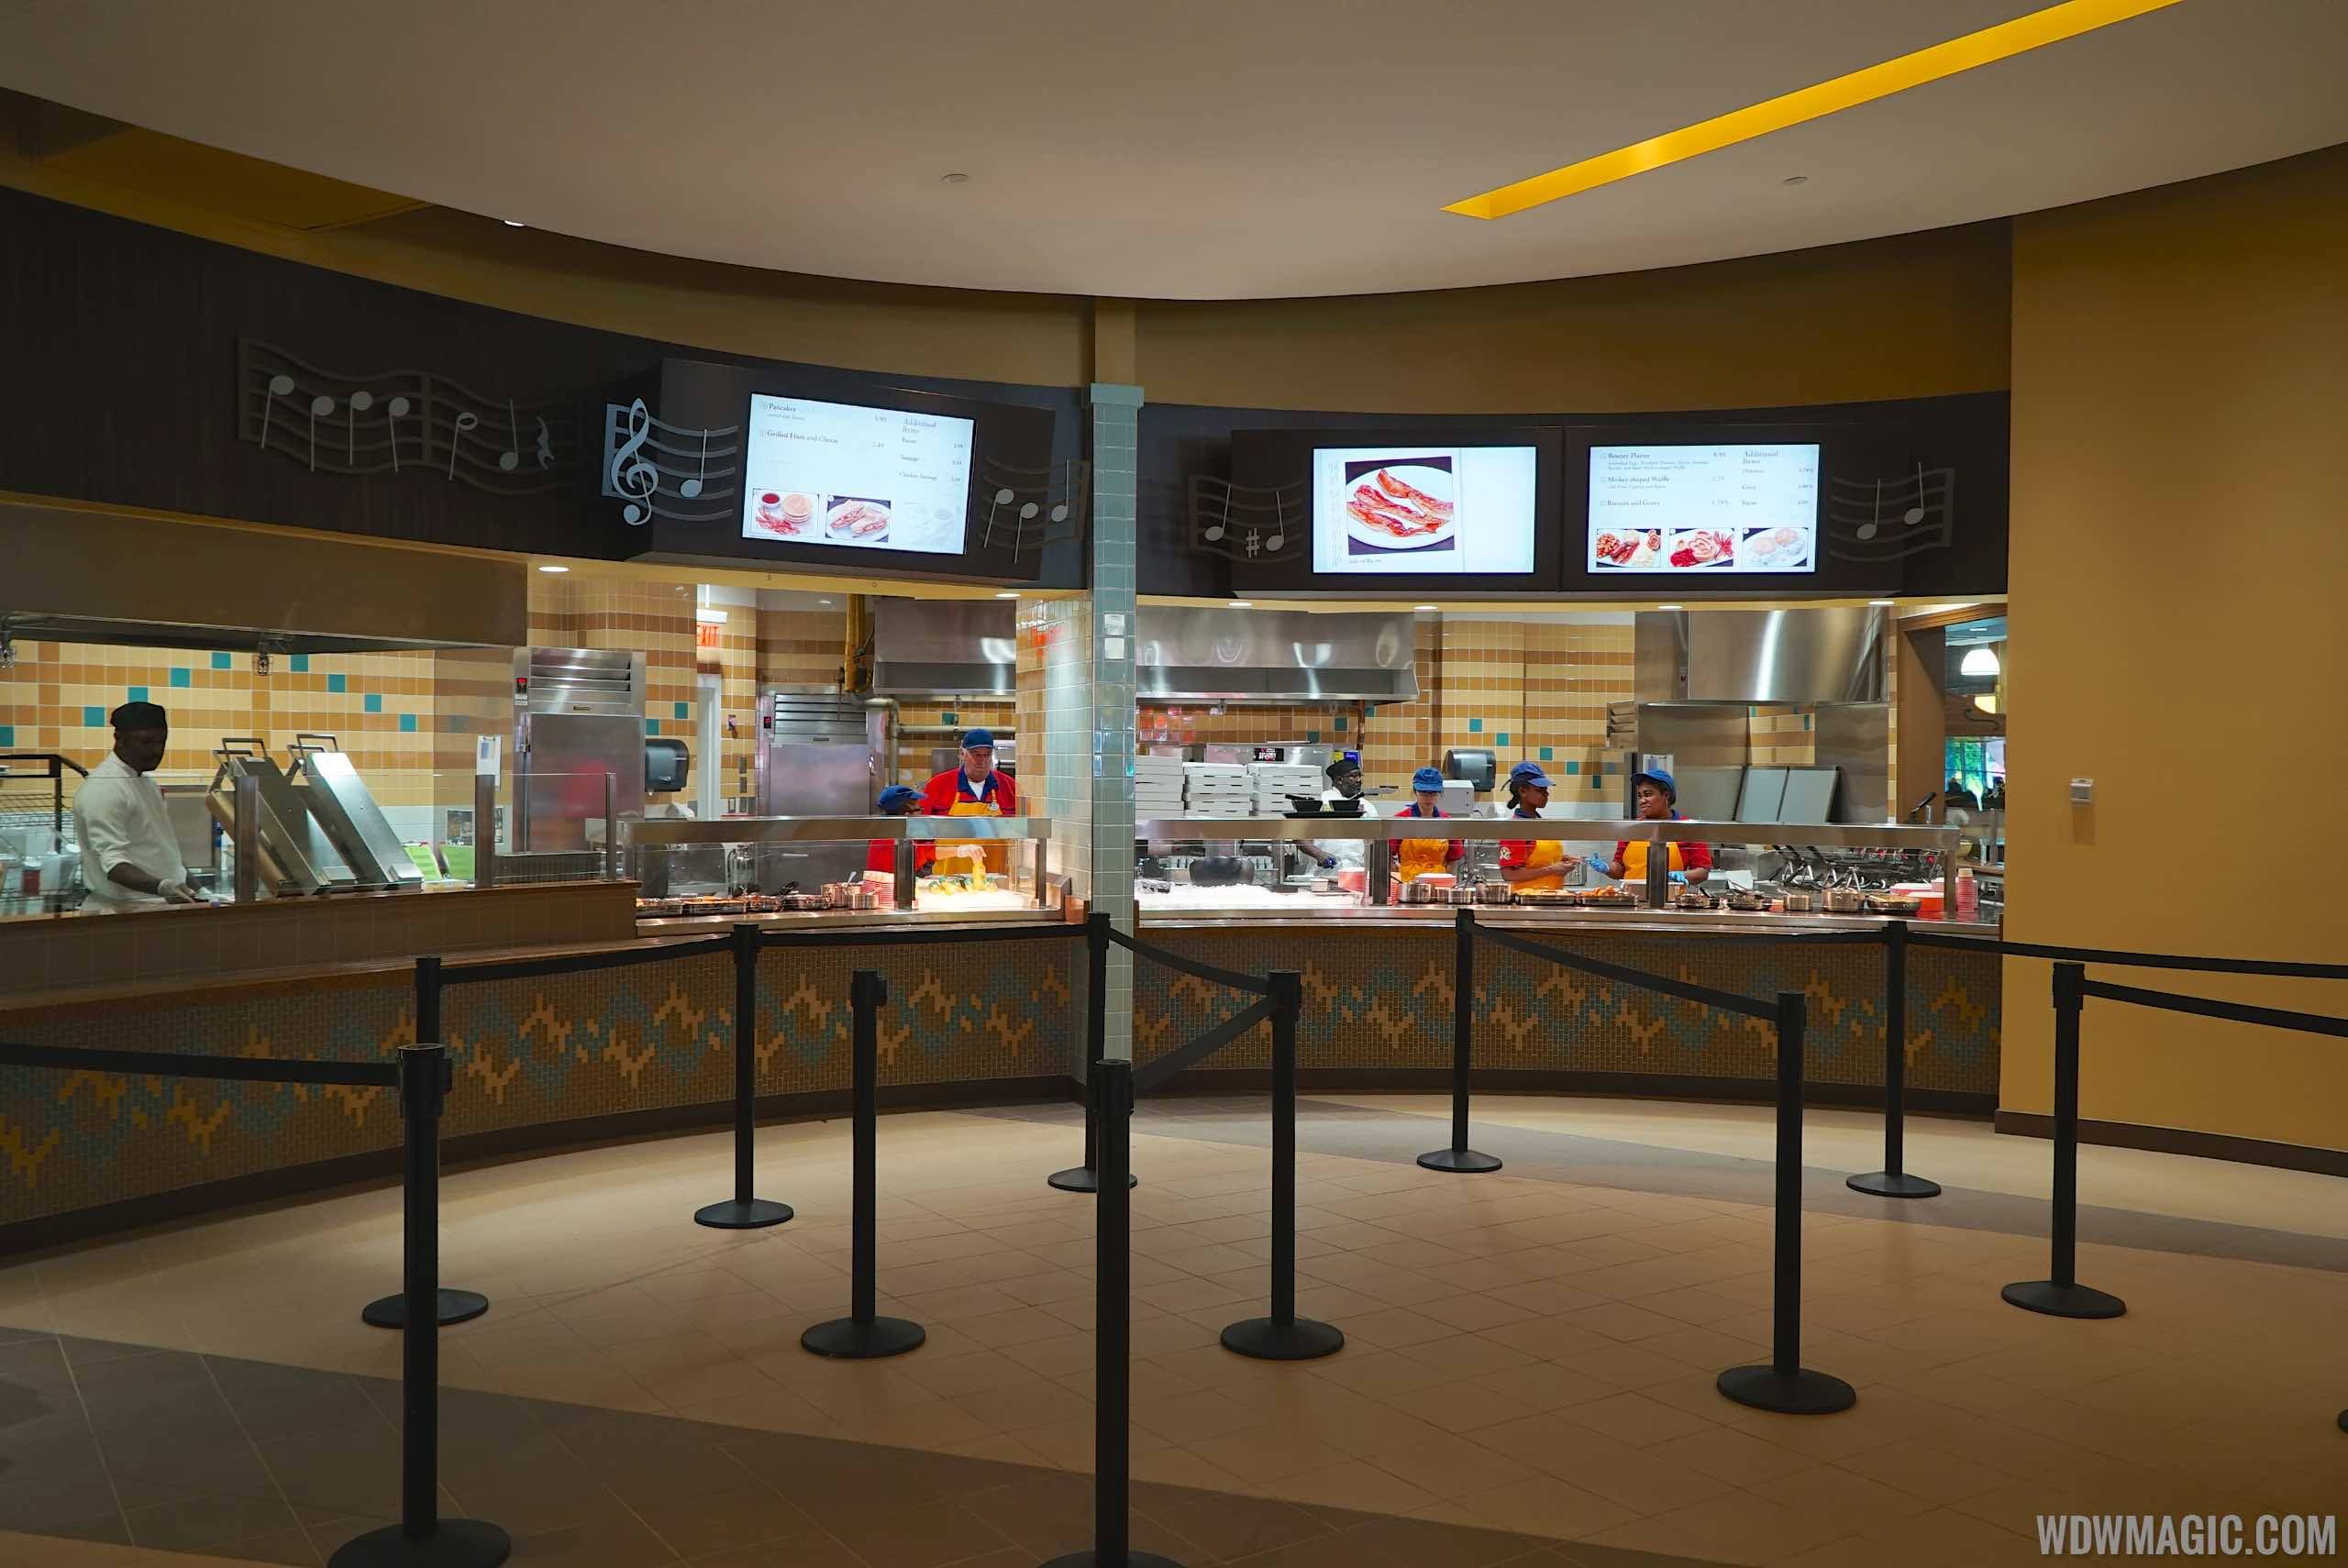 Disney's All Star Music Resort Intermission Food Court closing for major refurbishment later this summer